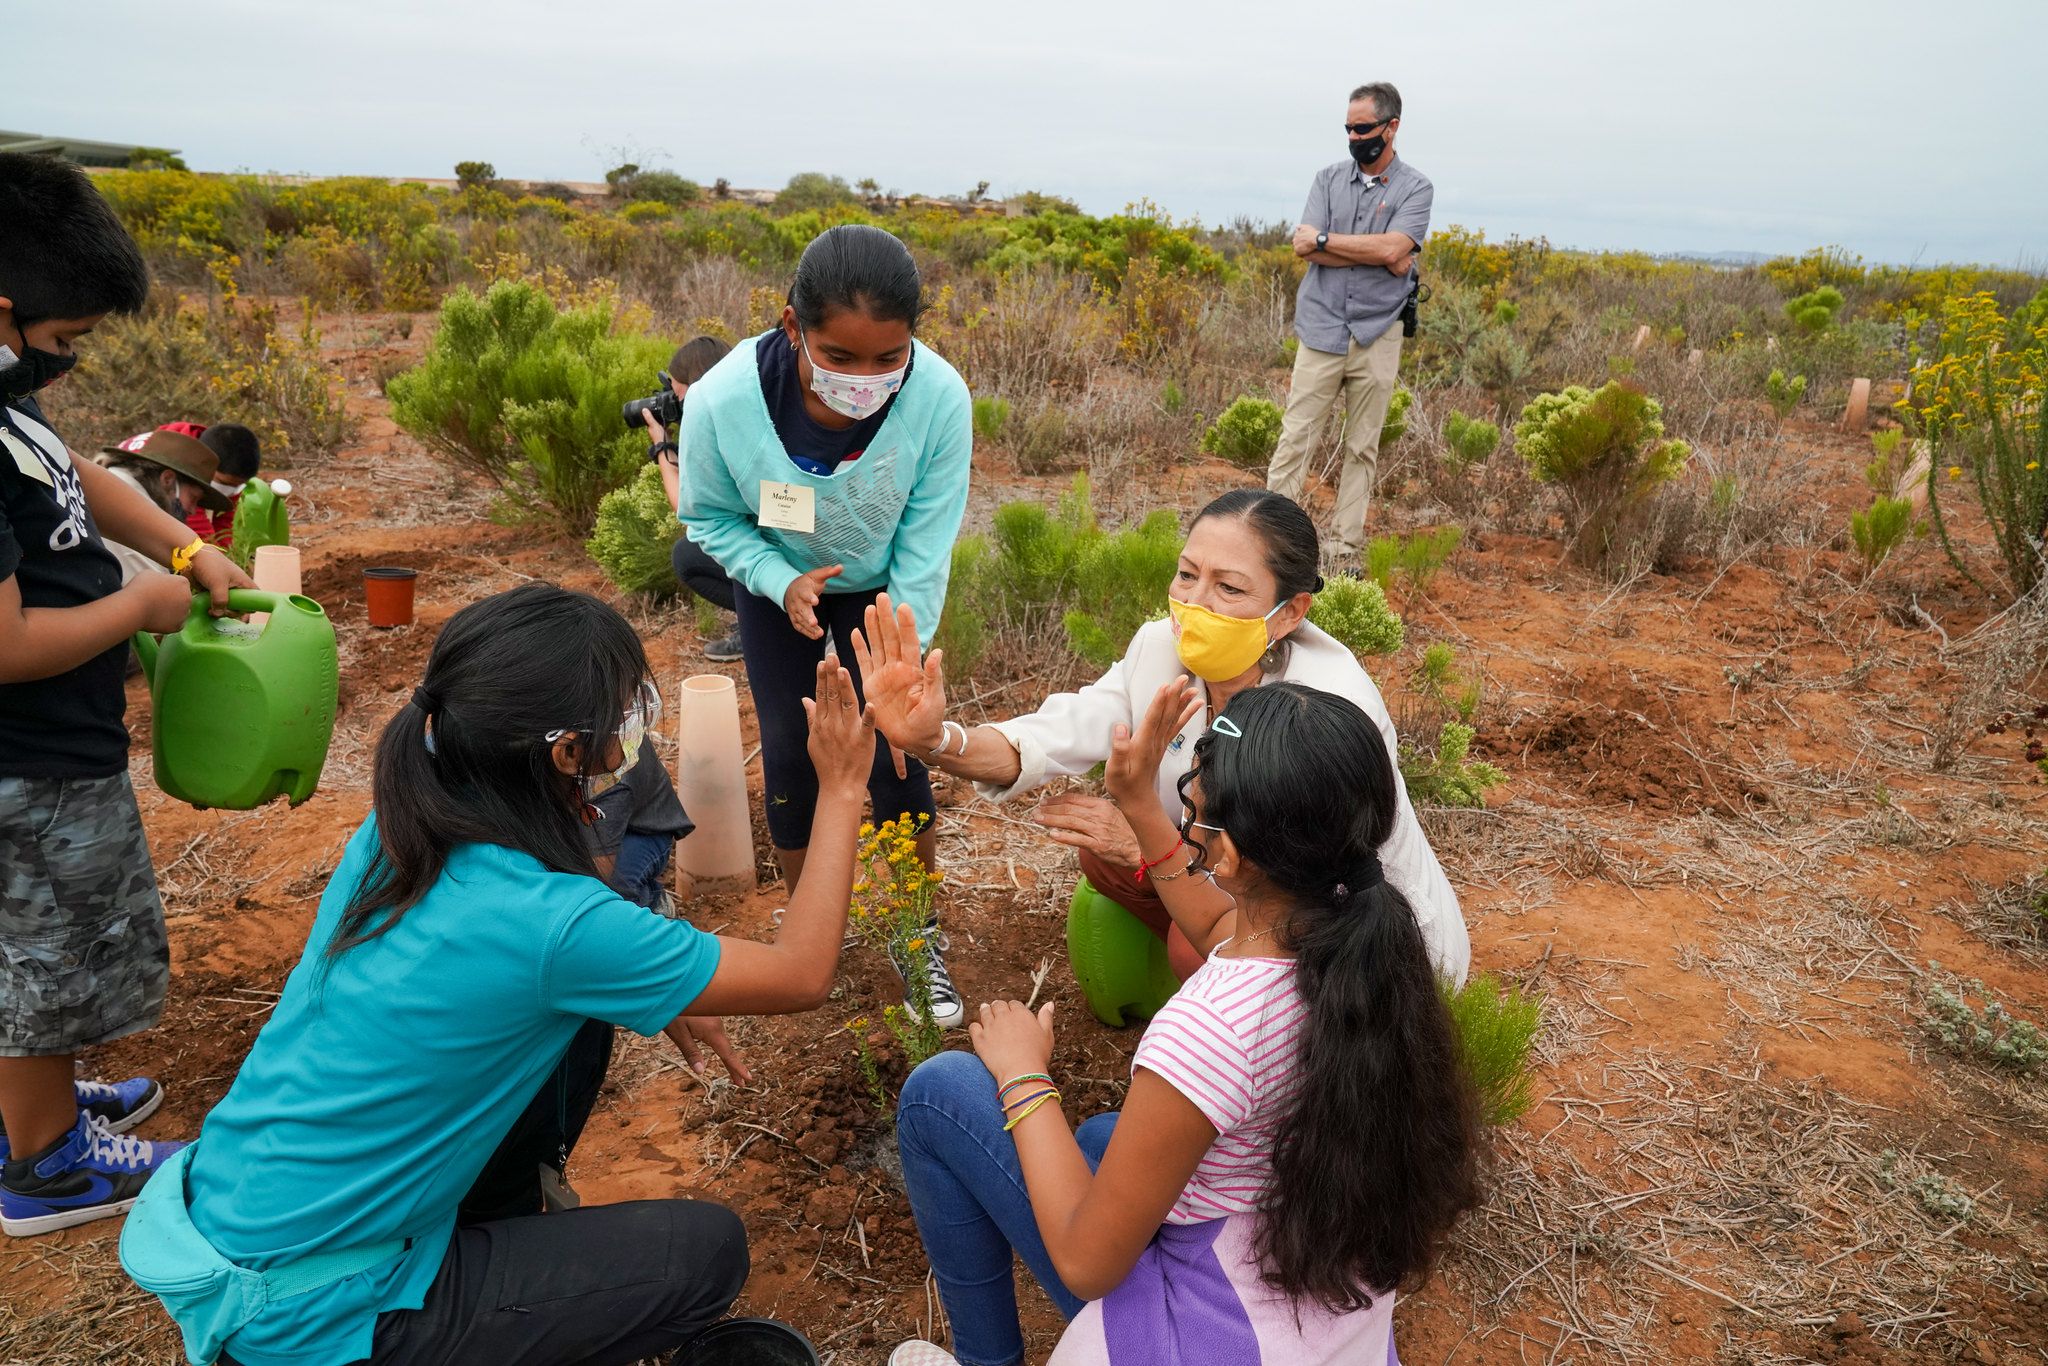 Sec Haaland with Children at San Diego National Wildlife Refuge